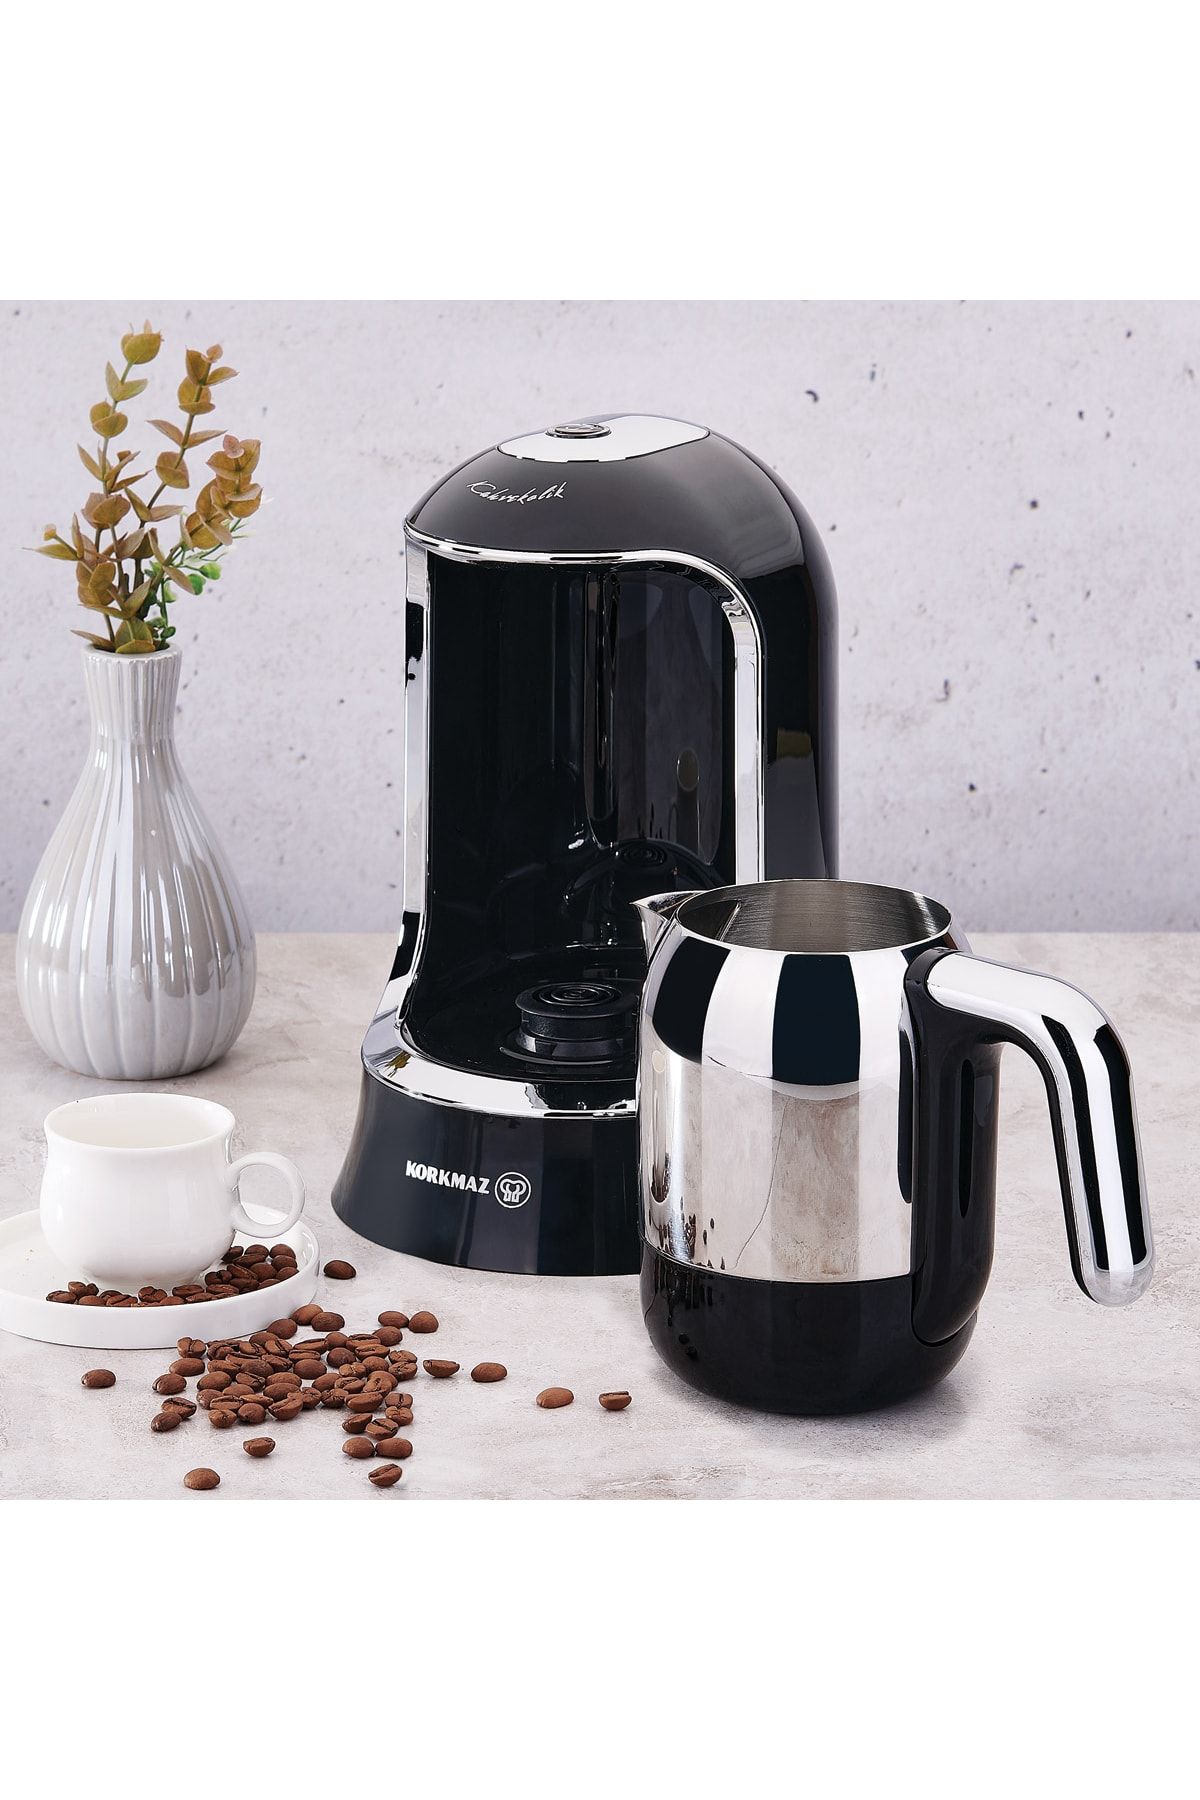 KORKMAZ Kahvekolik Otomatik Kahve Makinesi -yeni Seri-